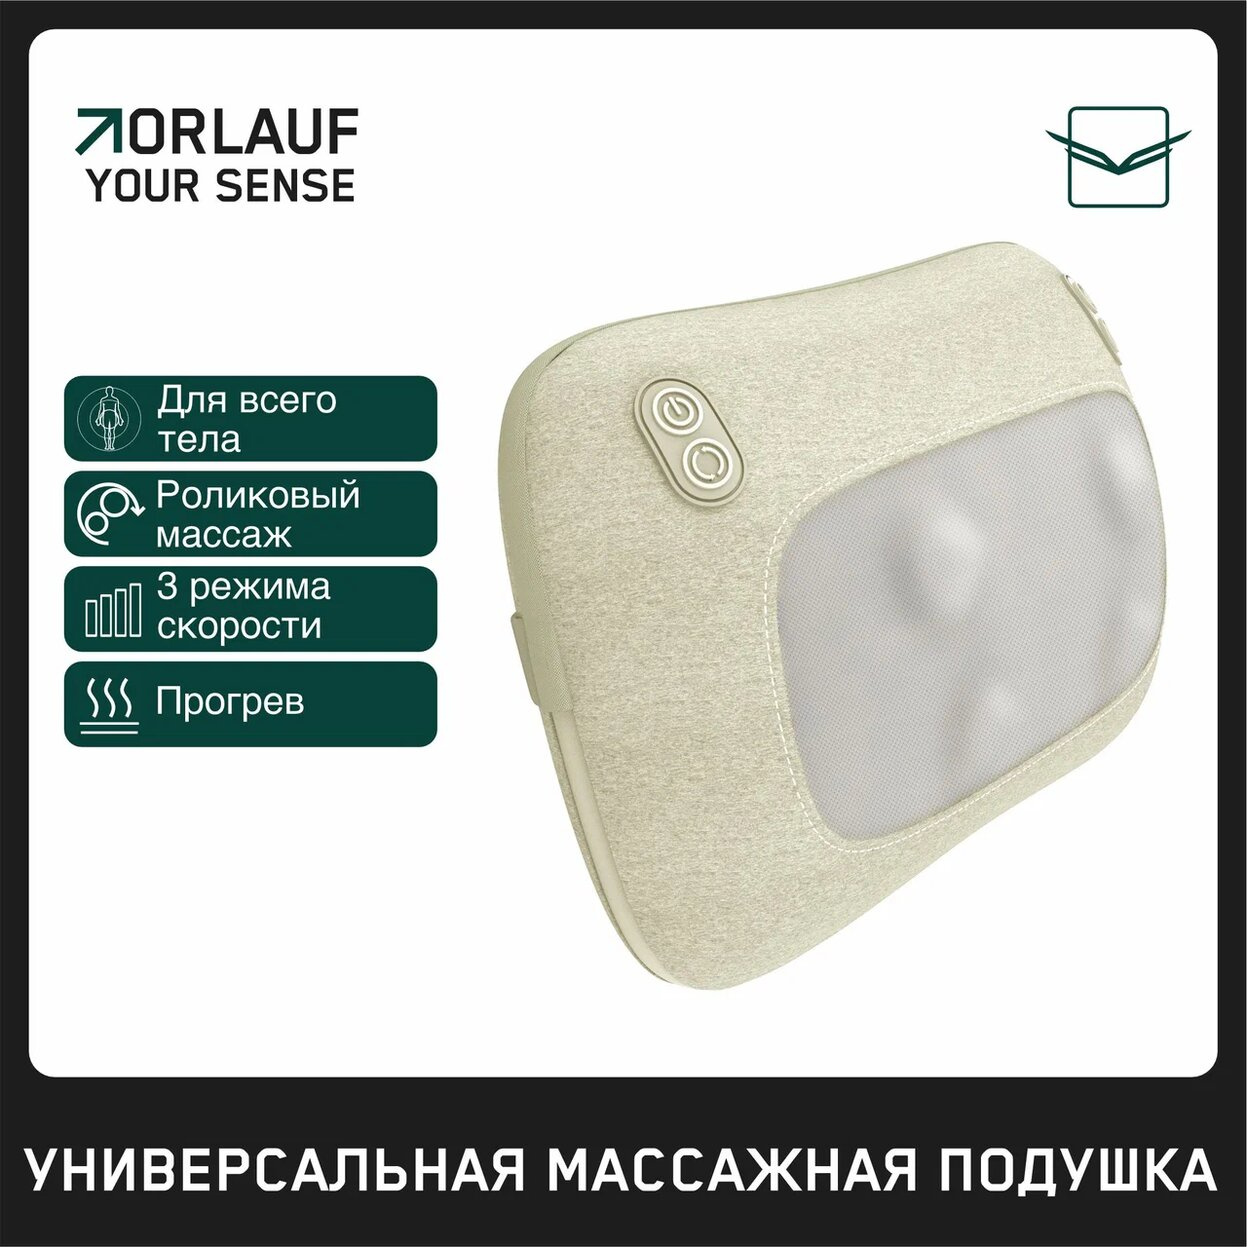 Orlauf Your Sense из каталога устройств для массажа в Омске по цене 9400 ₽